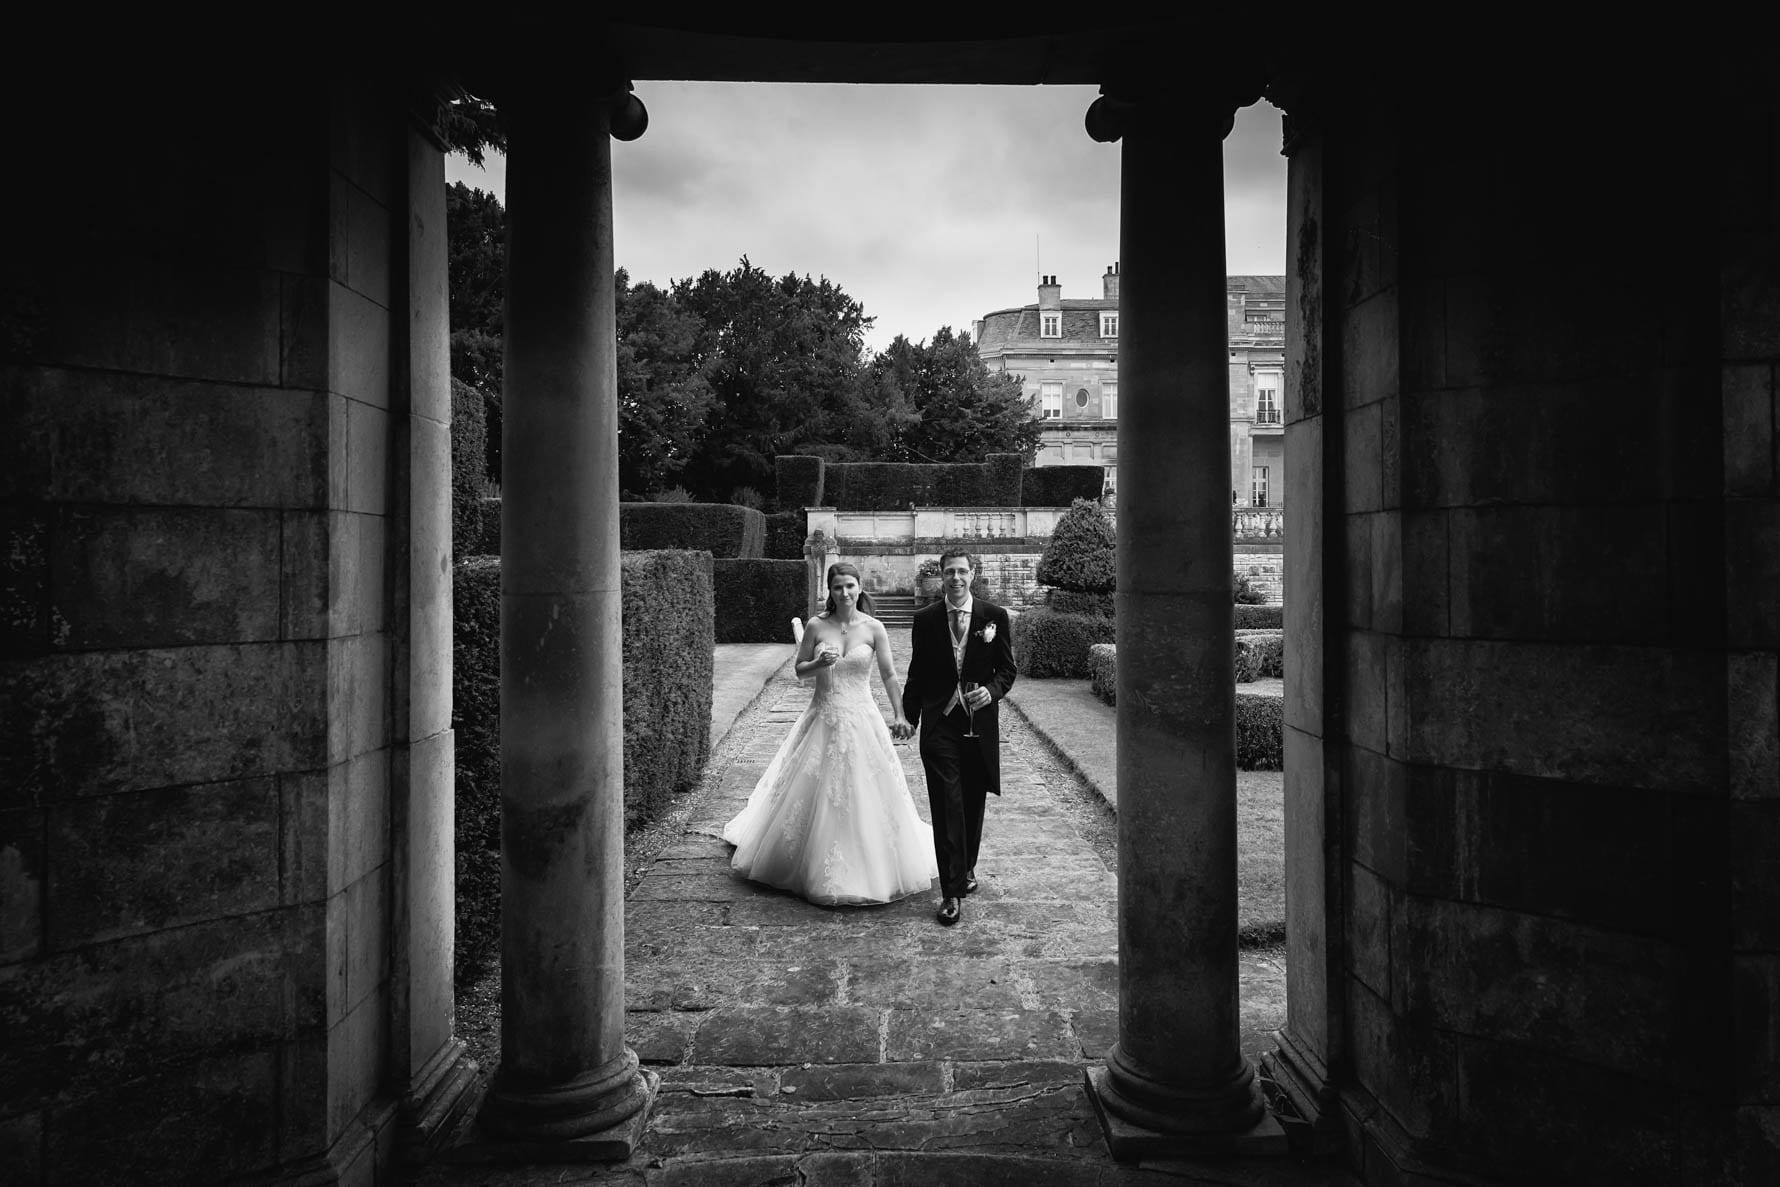 Bedfordshire wedding in the gardens of Luton Hoo Hotel